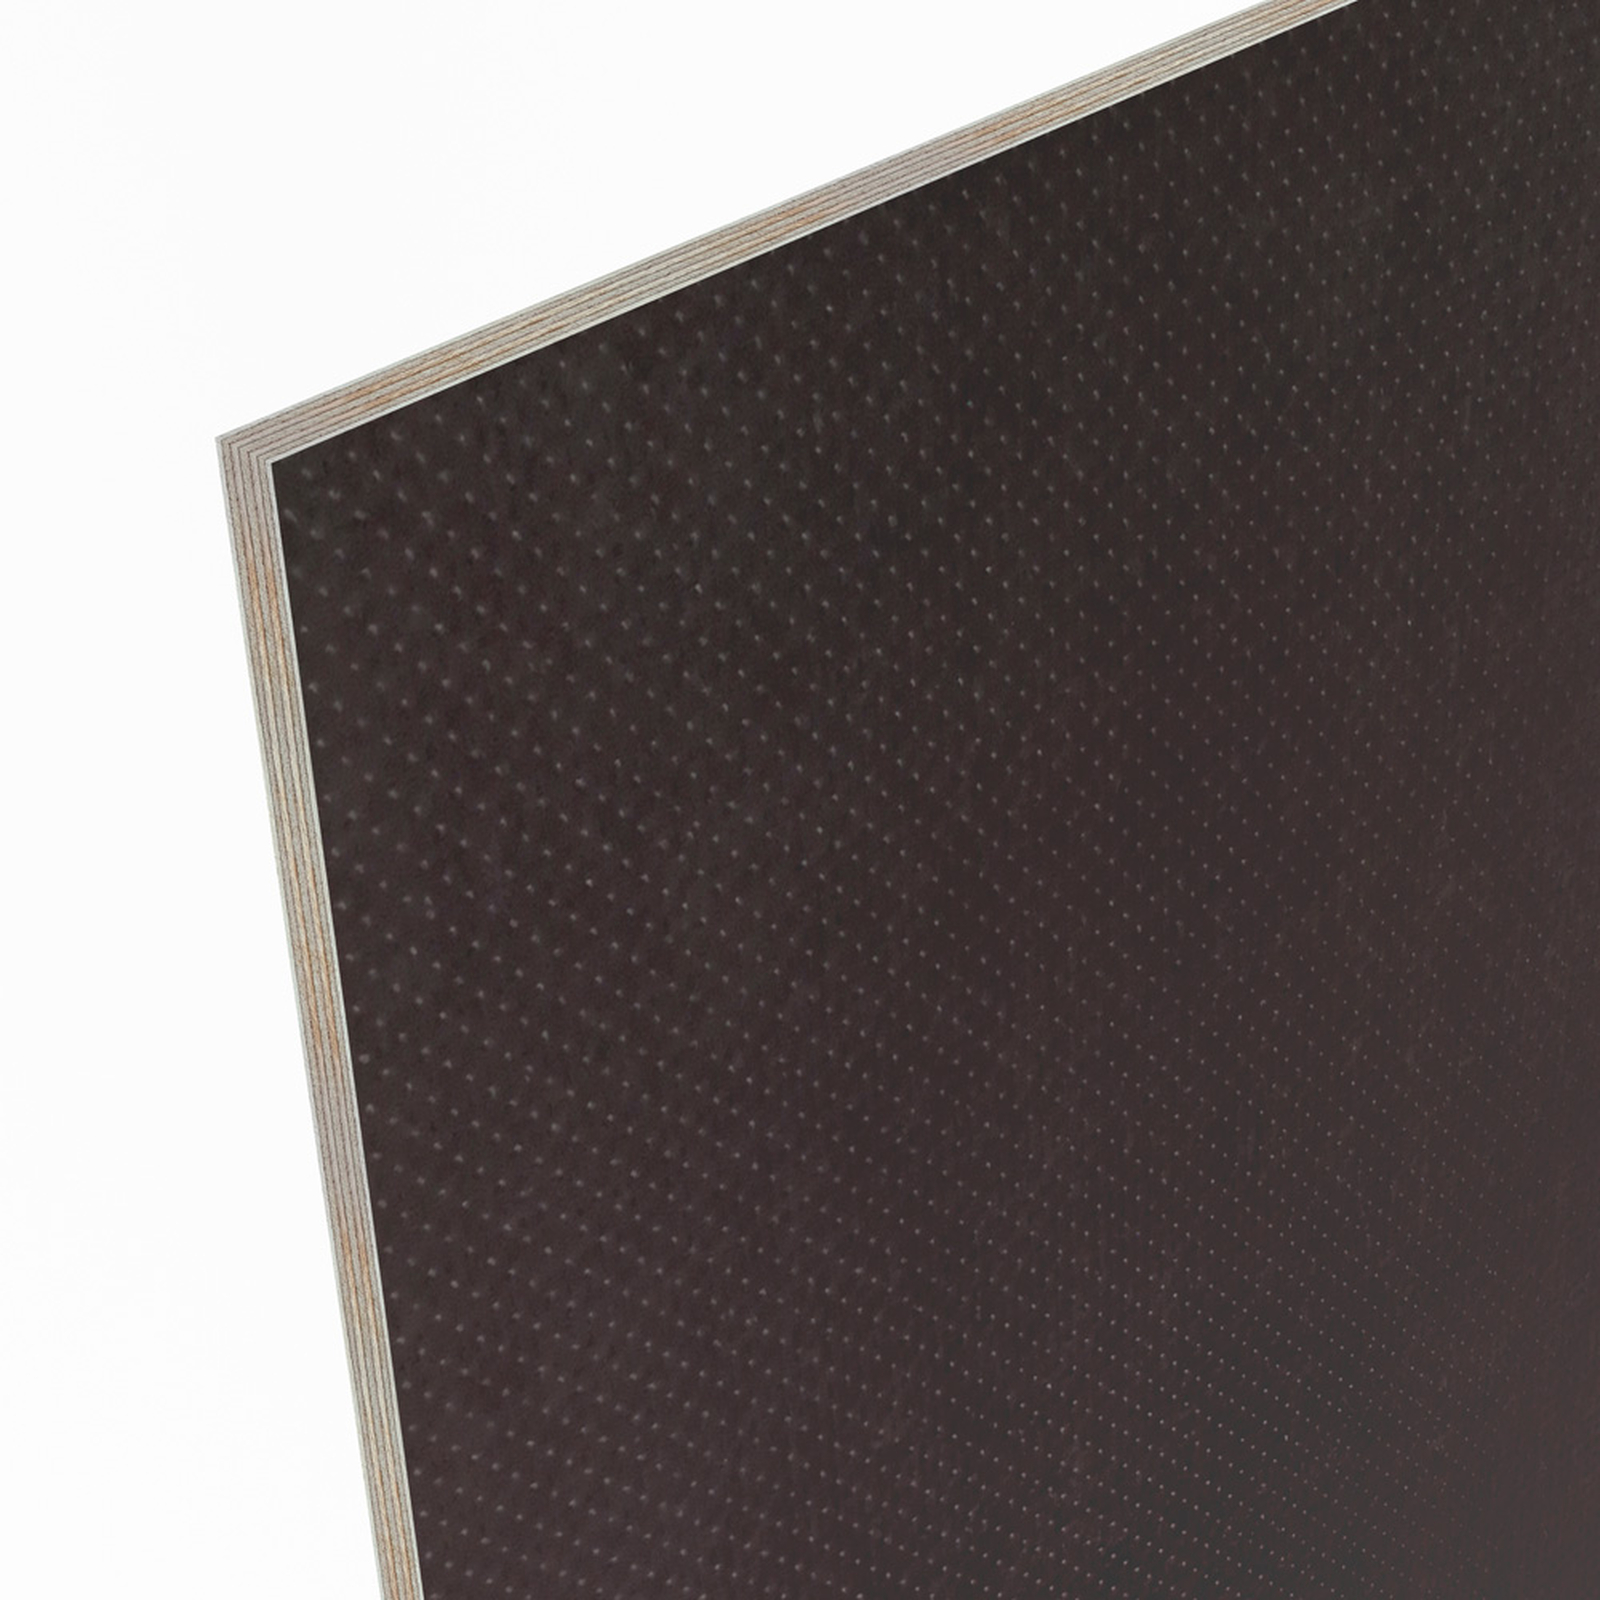 21mm Multiplex Zuschnitt Siebdruckplatten Plattenzuschnitte Bodenplatte Holz 